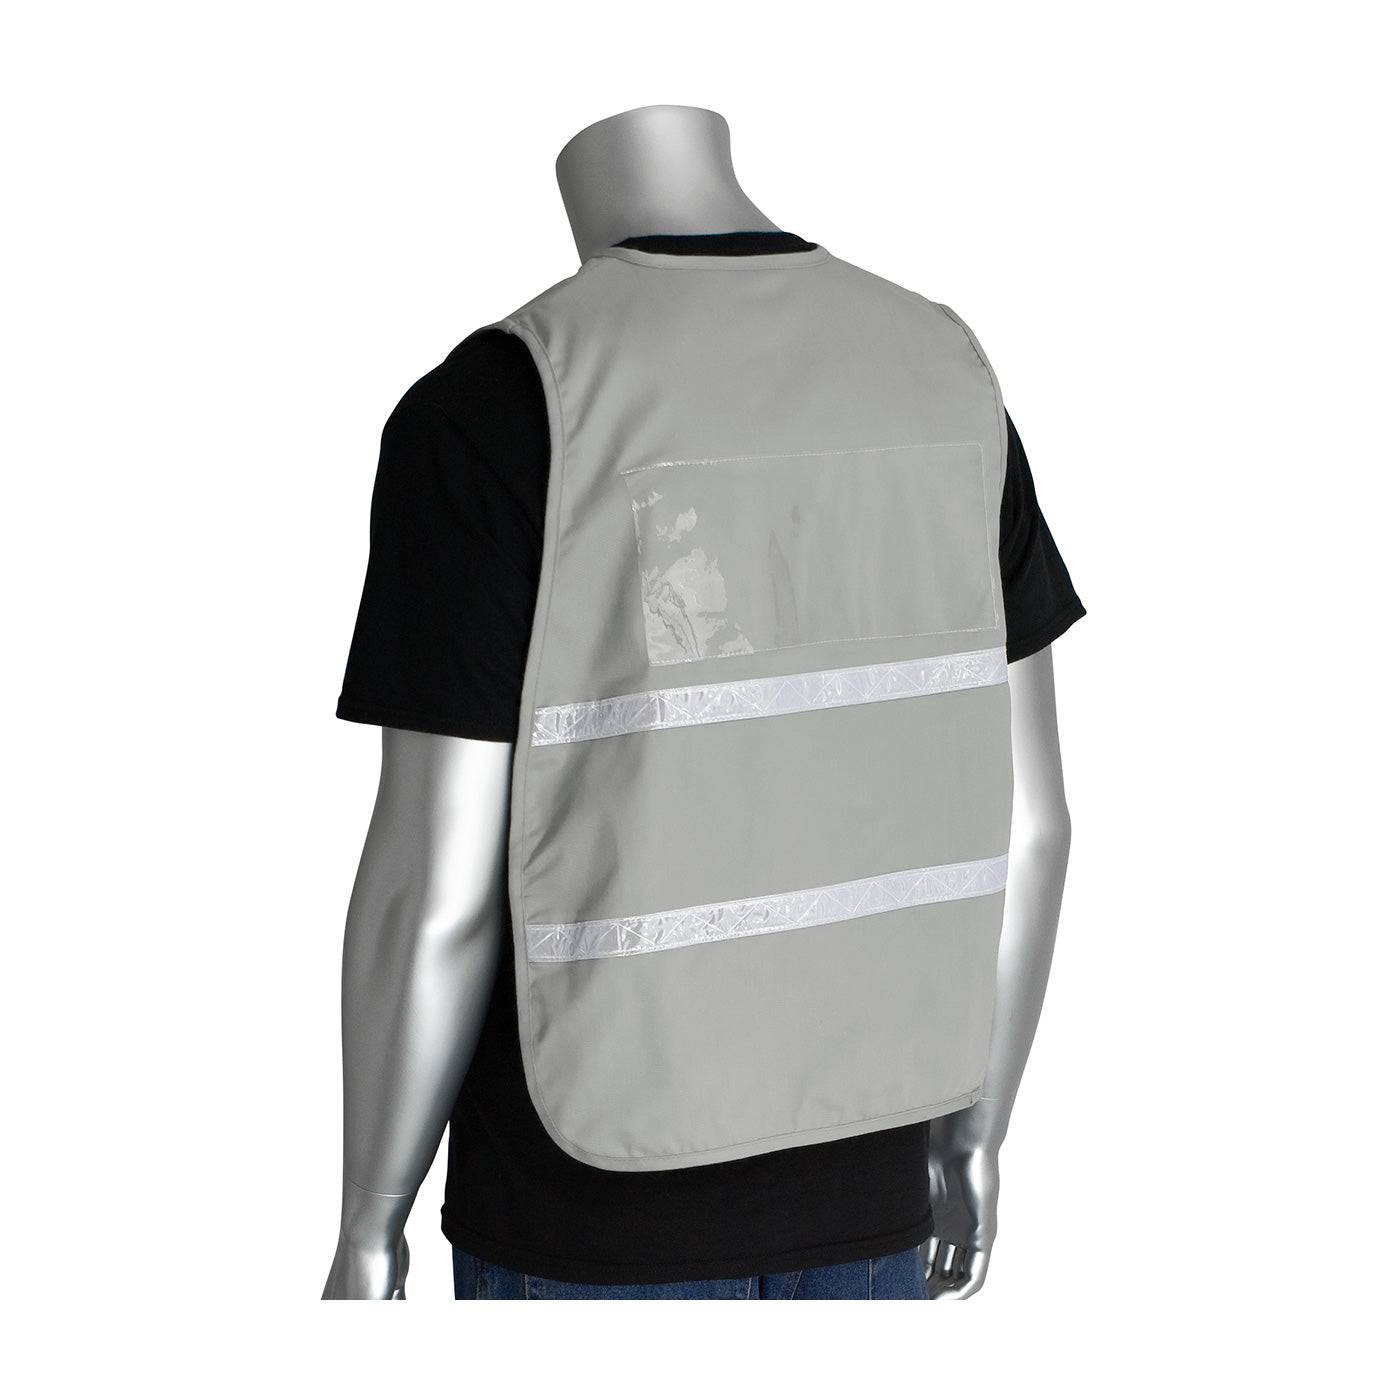 Non-ANSI Incident Command Vest - Cotton/Polyester Blend